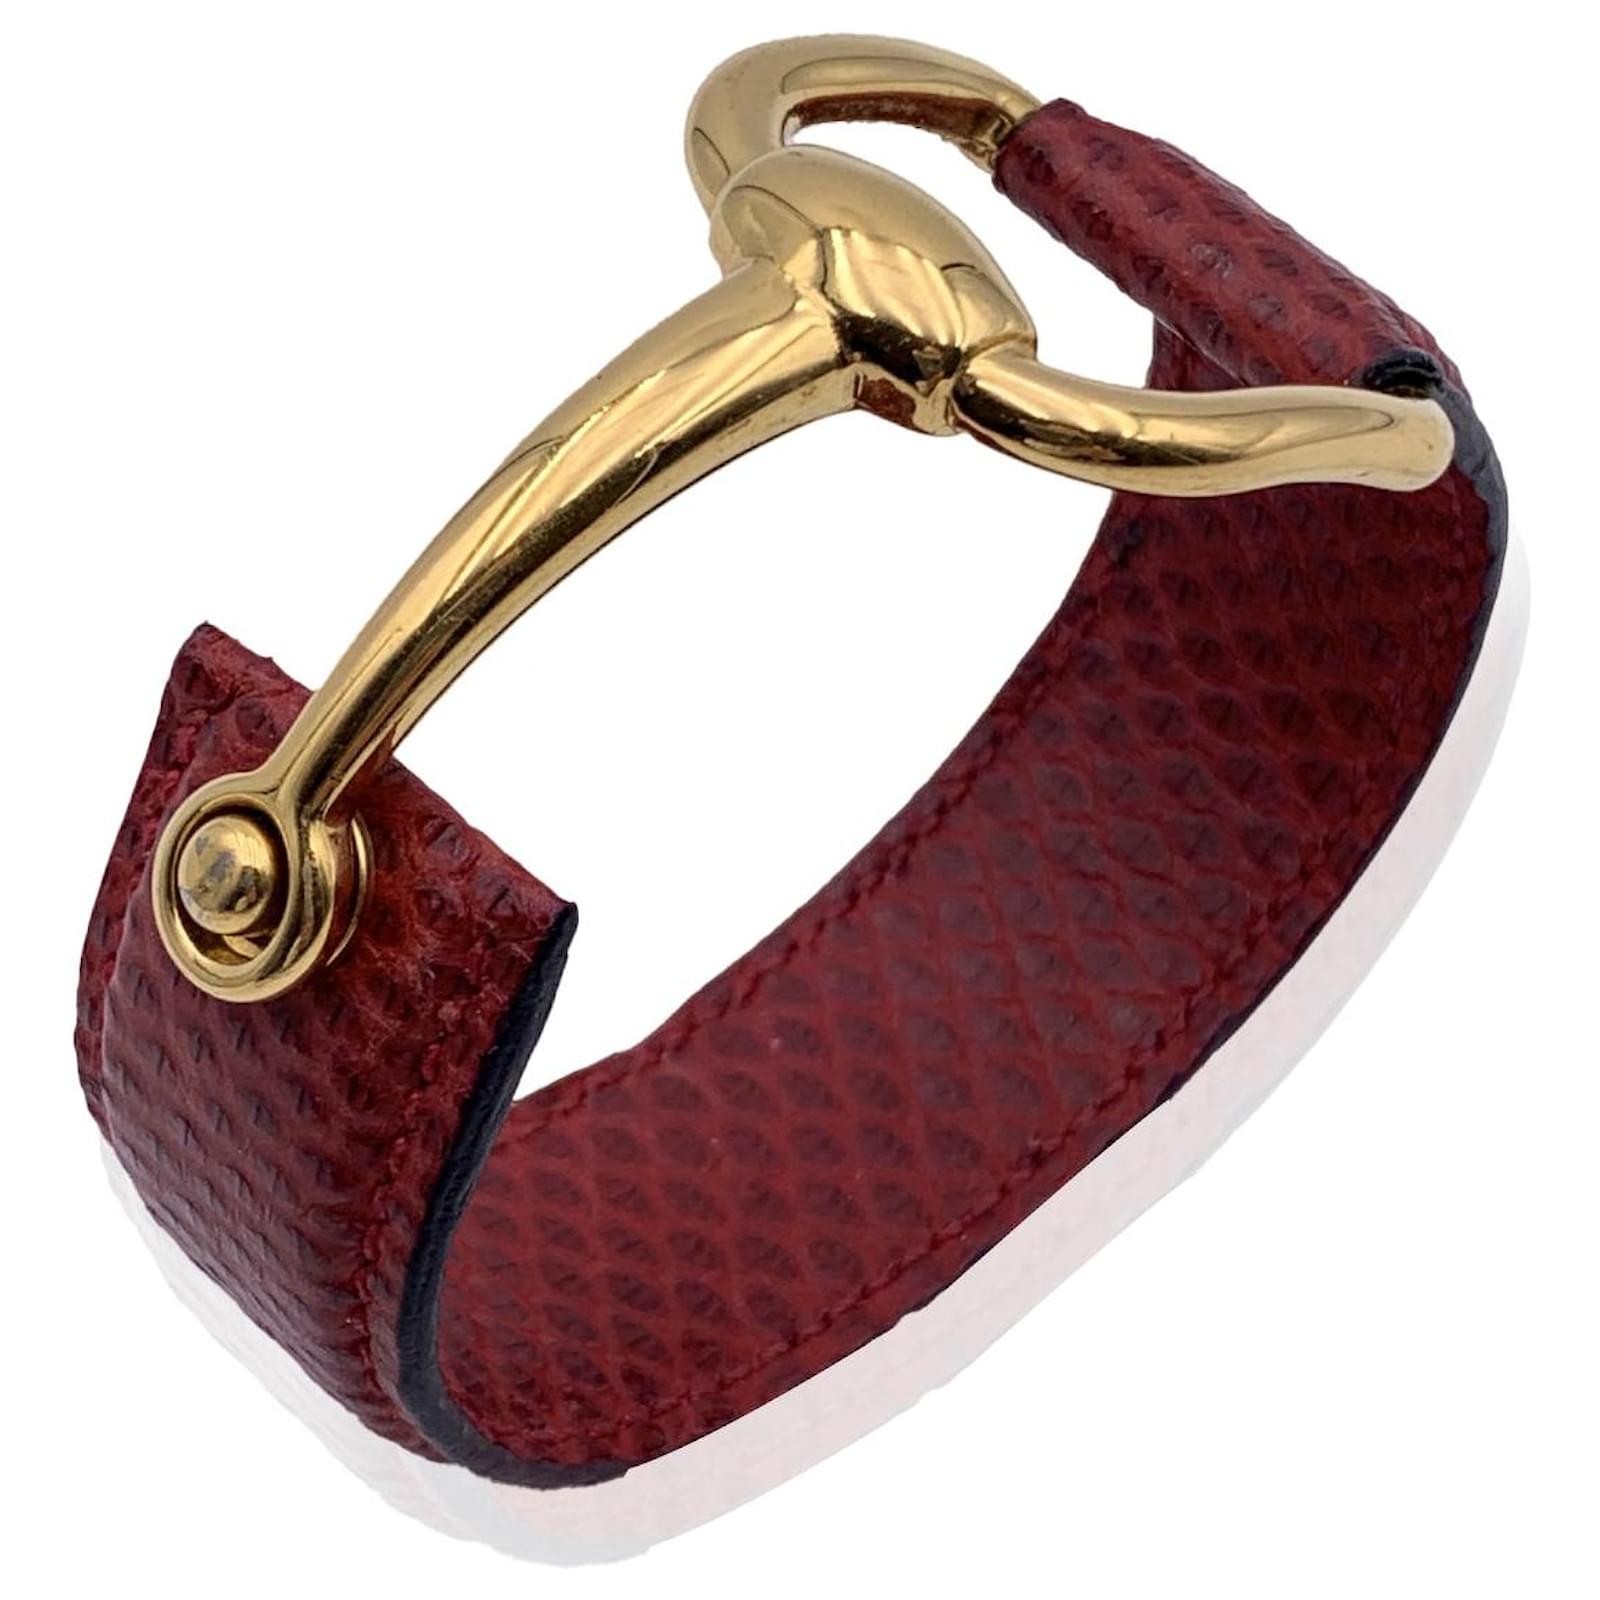 Gucci Leather Belt with Horse-bit Detail - Vintage Lux